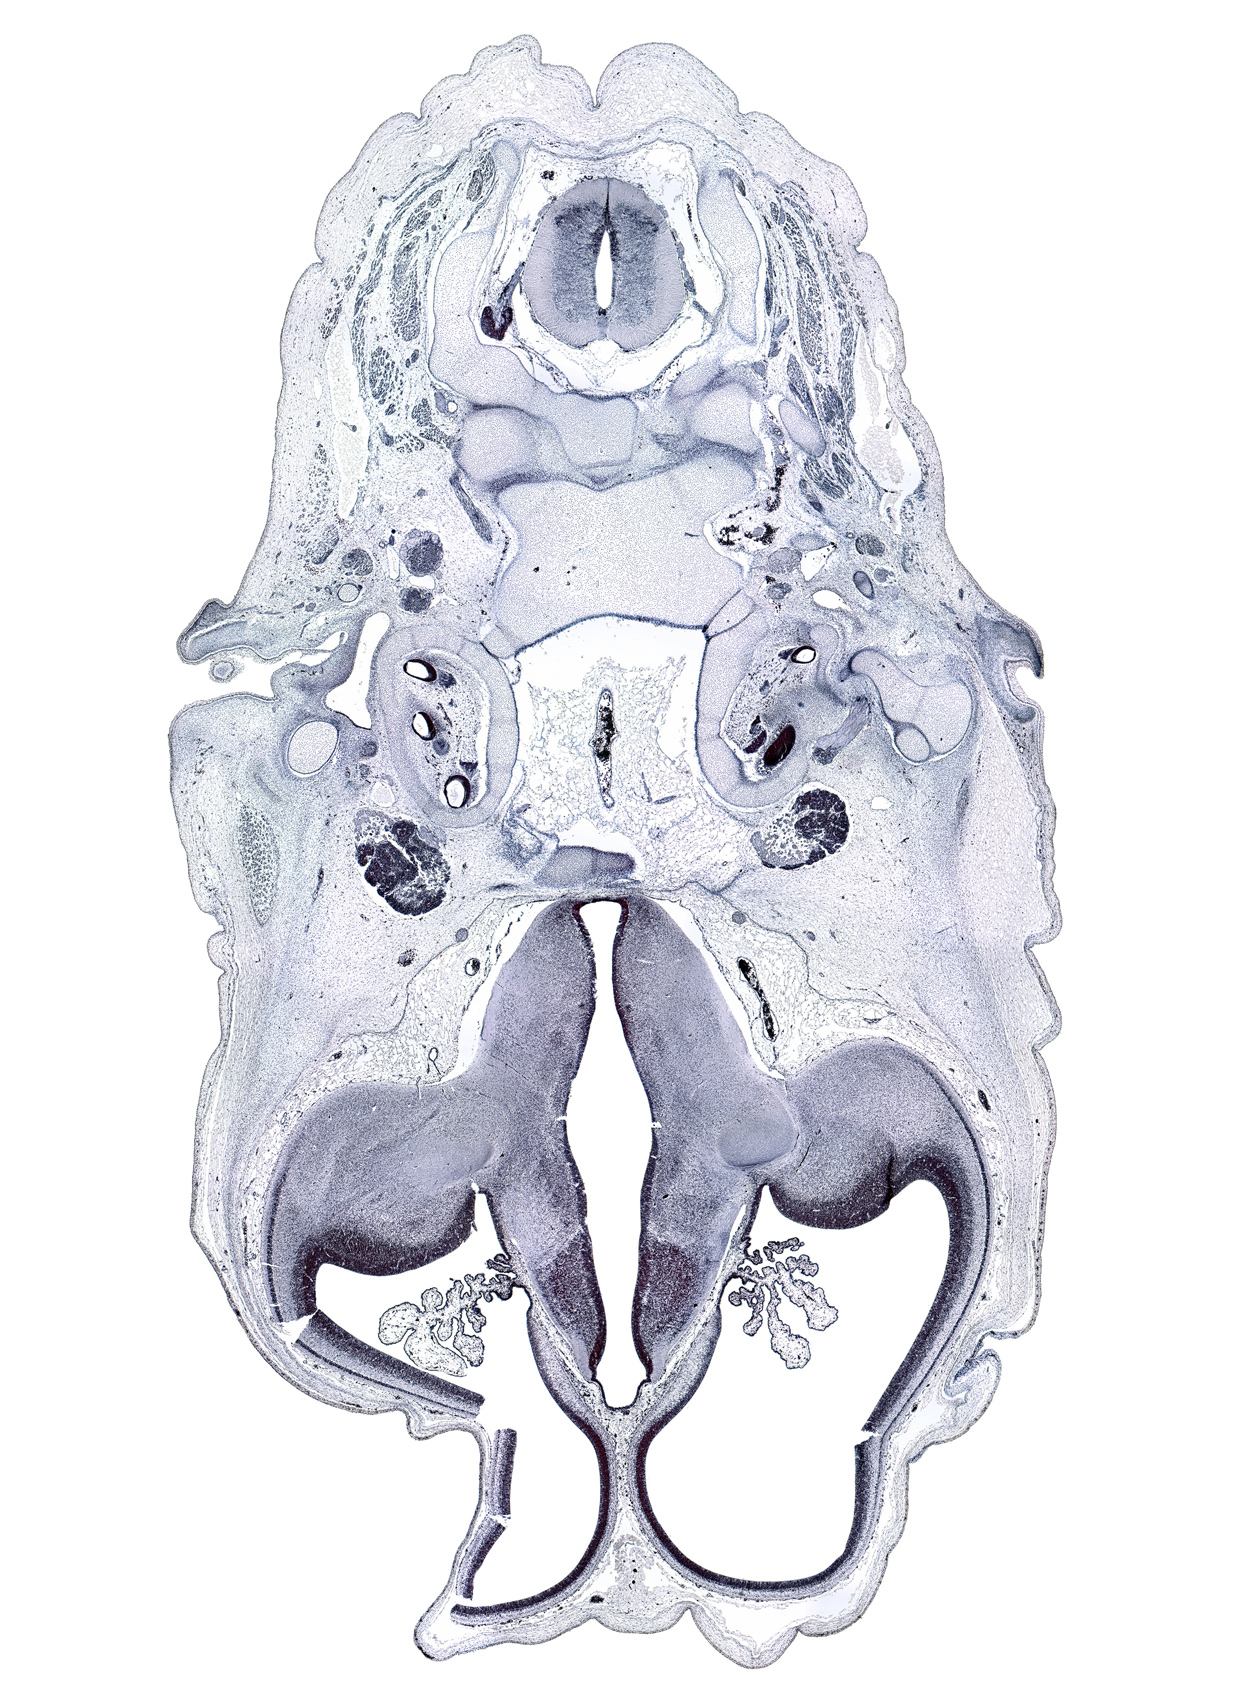 C-2 / C-3 interganglion region, artifact space(s), auricle, basi-occipital (basal plate), choroid plexus, dorsal funiculus, dorsal thalamus, external acoustic meatus, facial nerve (CN VII), geniculate ganglion (CN VII), incus, lateral funiculus, lateral ventricular eminence (telencephalon), levator scapulae muscle, malleus, motor root of trigeminal nerve (CN V), roof plate of diencephalon, splenius muscle, trigeminal ganglion (CN V), ventral funiculus, ventral thalamus